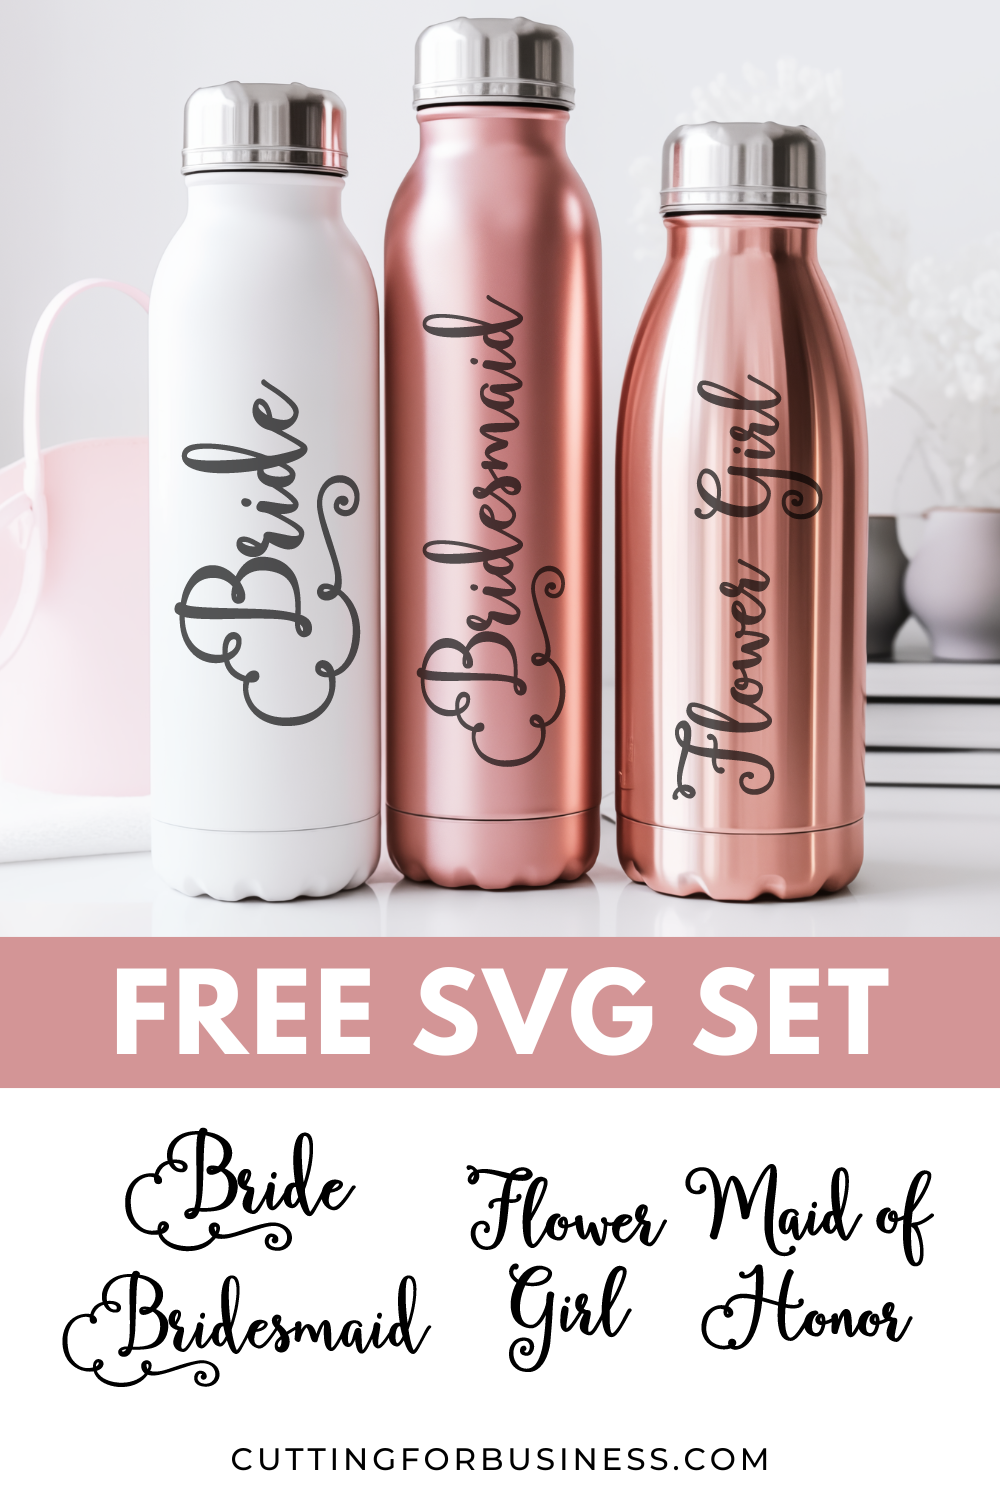 Free Wedding SVG Set - Bride, Bridesmaid, Flower Girl - cuttingforbusiness.com